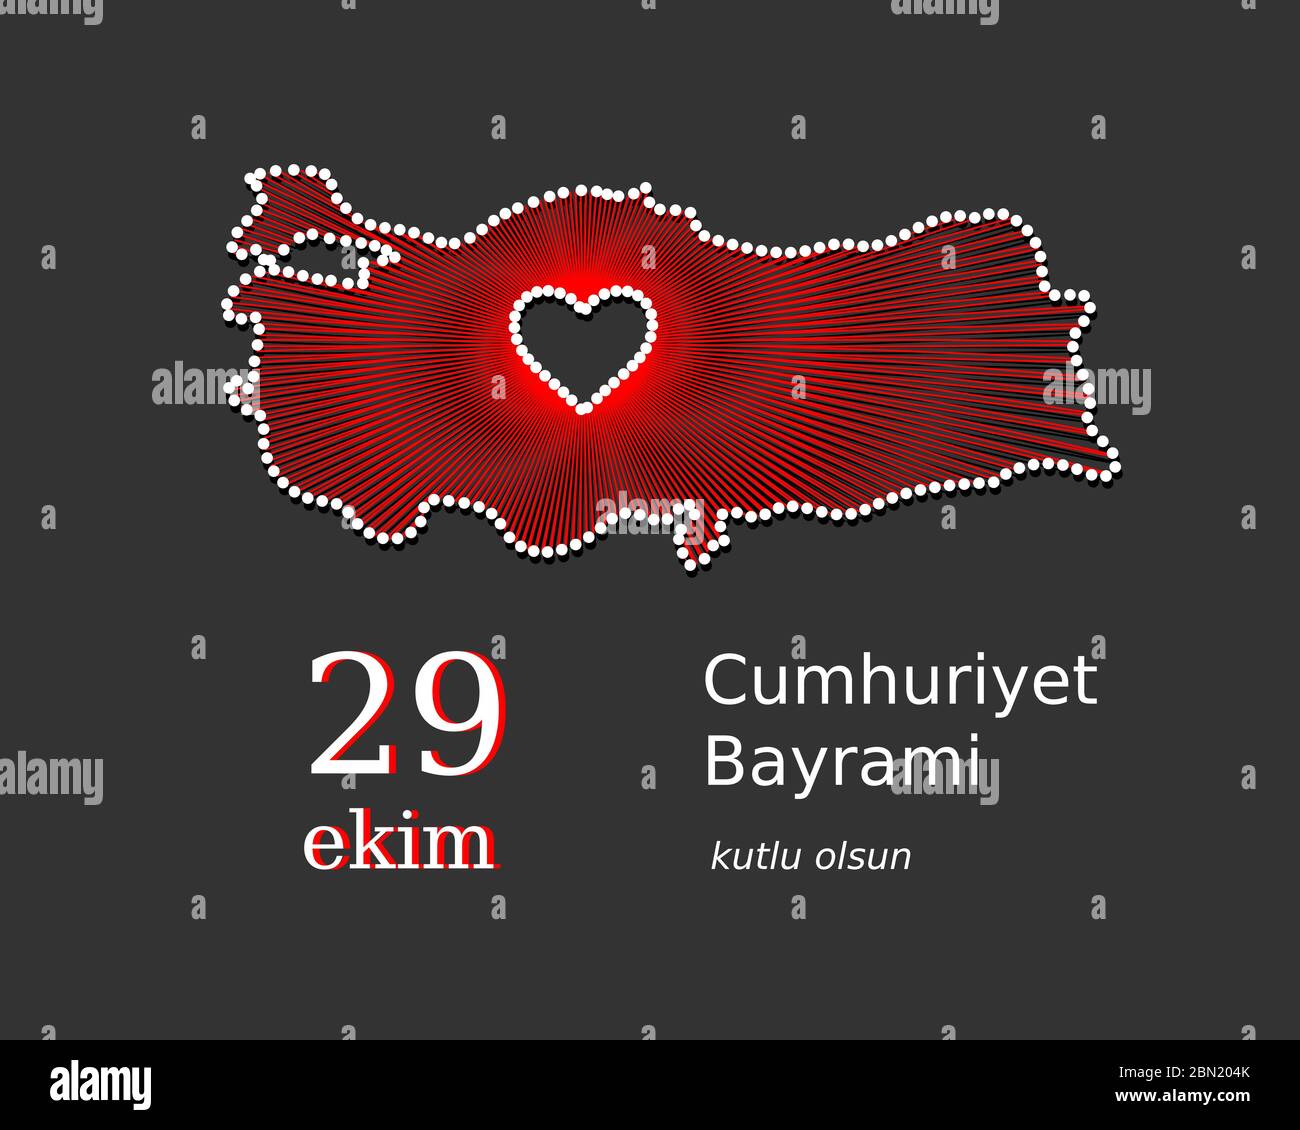 Ataturk, turkish vector map concept. Cumhuriyet Bayrami, 29 ekim, kutlu olsun. Translation 29 october Republic Day of Turkey, happy holiday. Banner Stock Vector